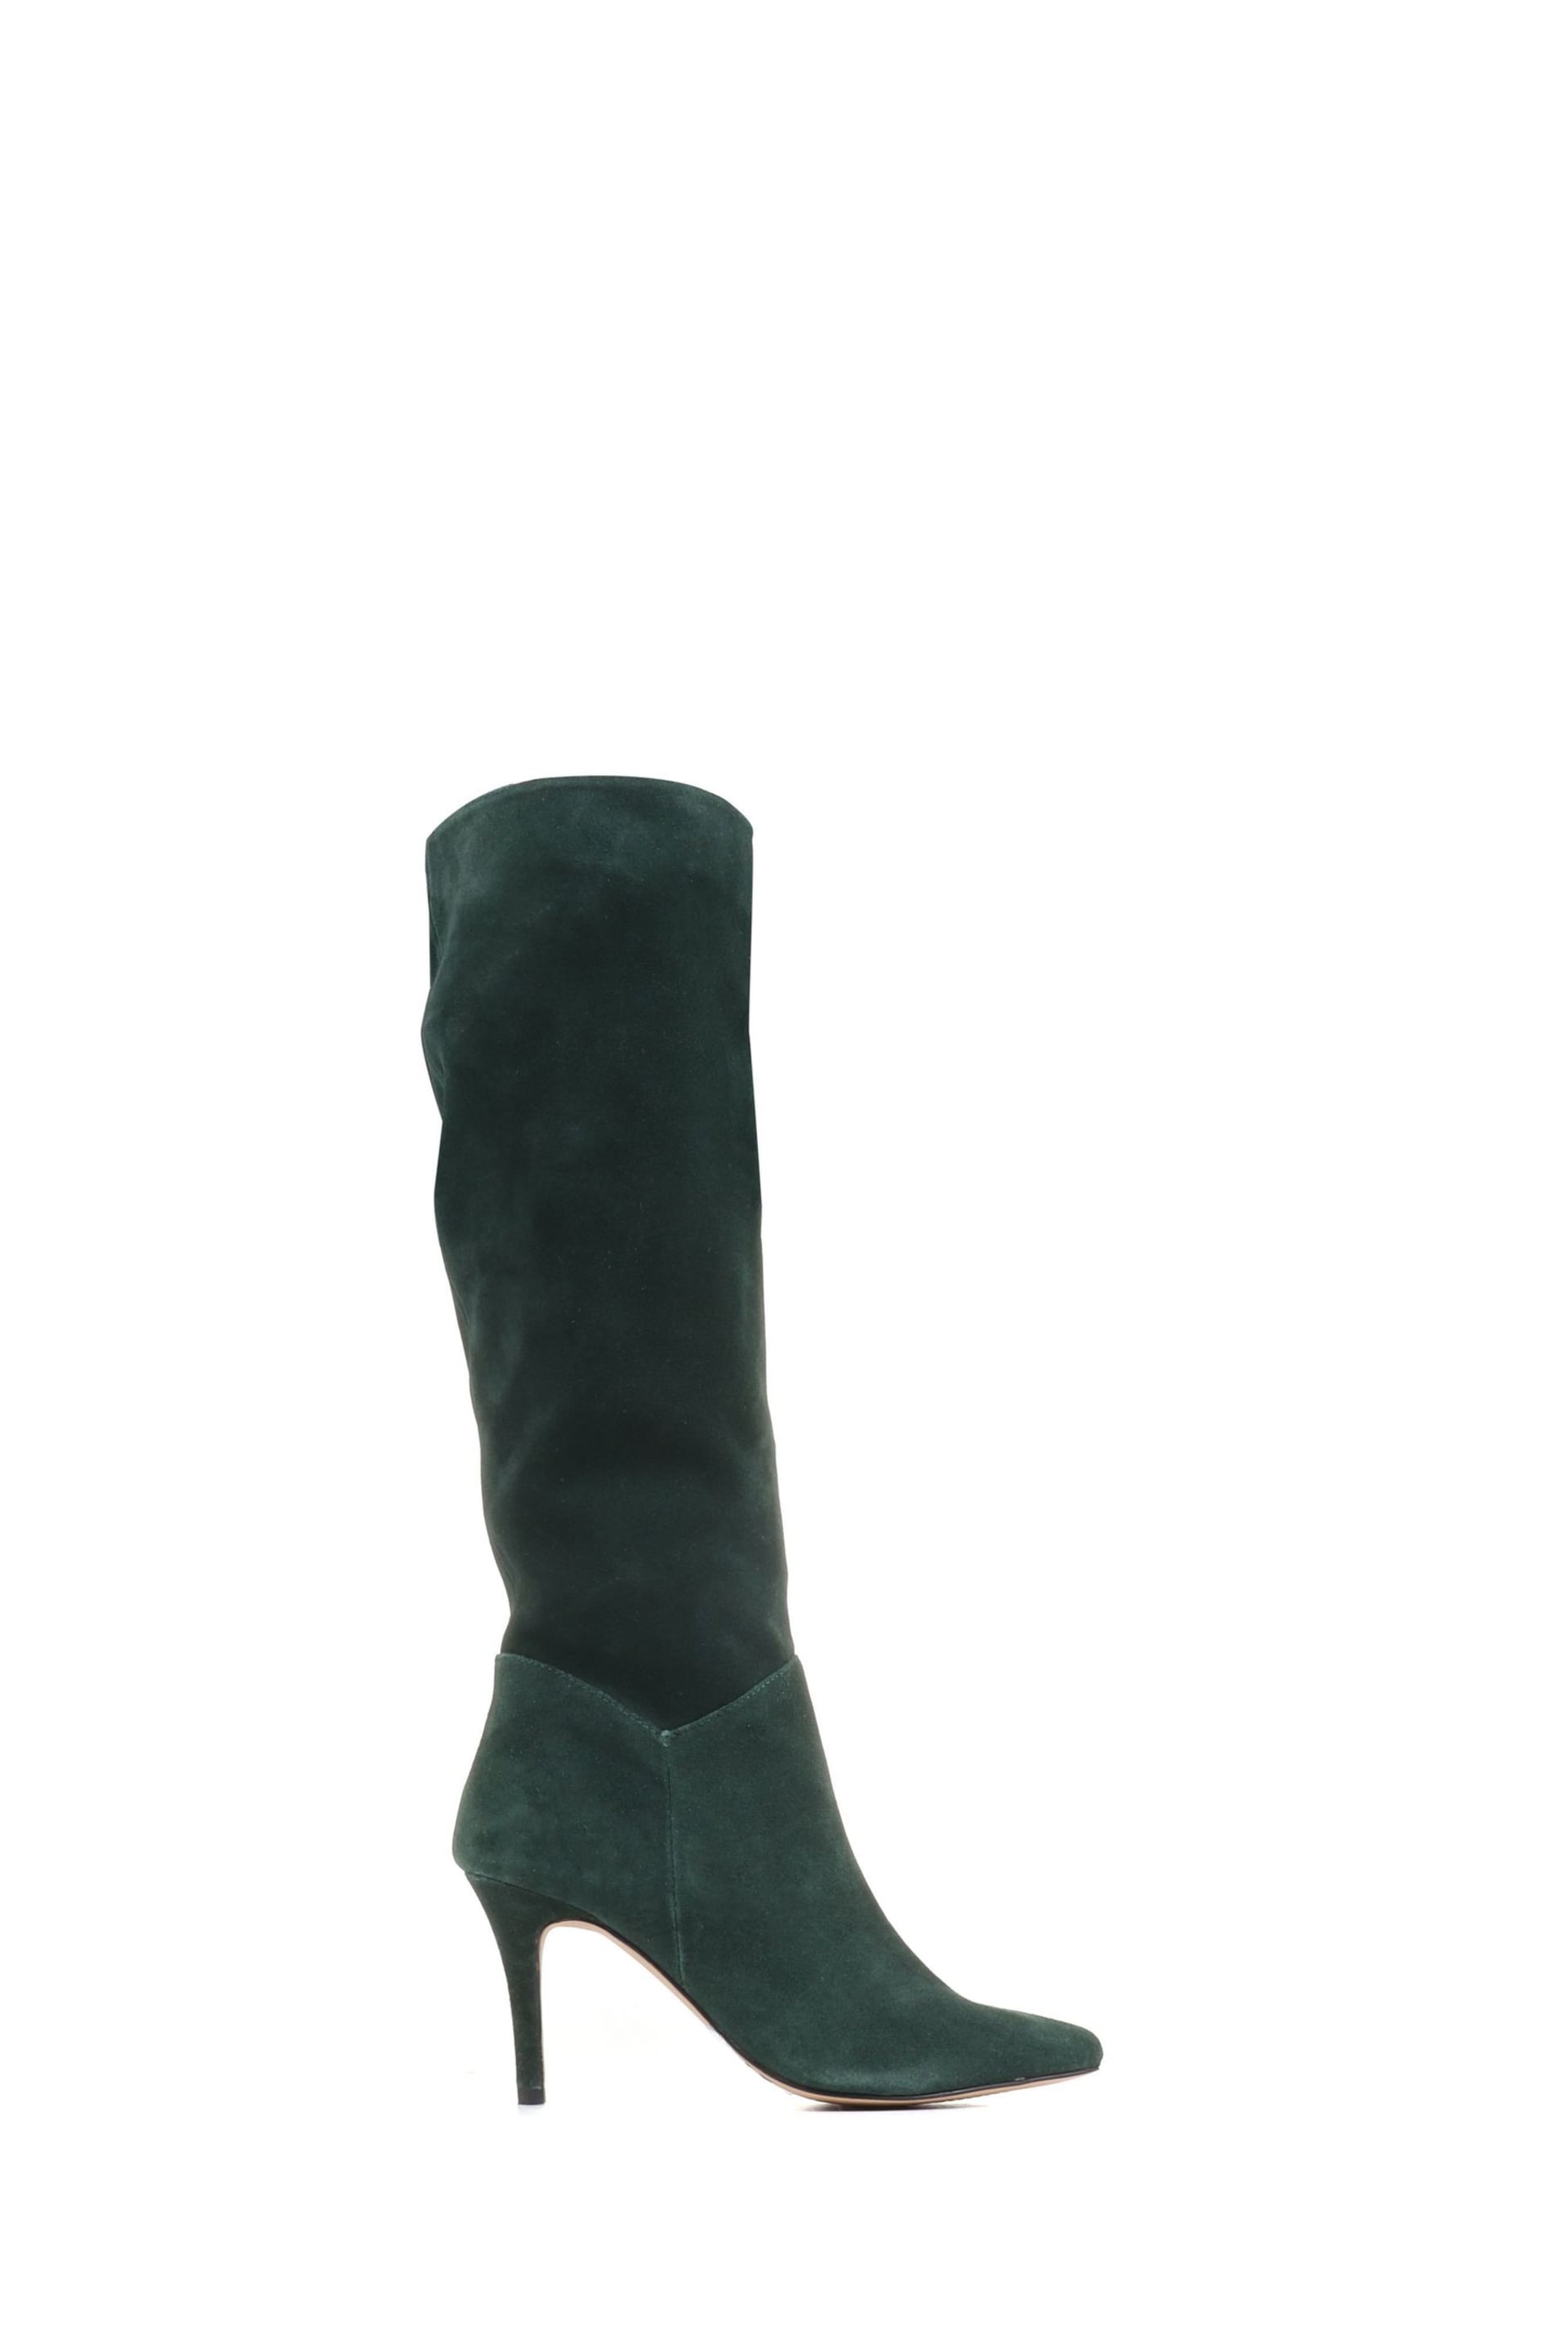 Jones Bootmaker Natural Luz Stiletto Knee High Boots - Image 2 of 5